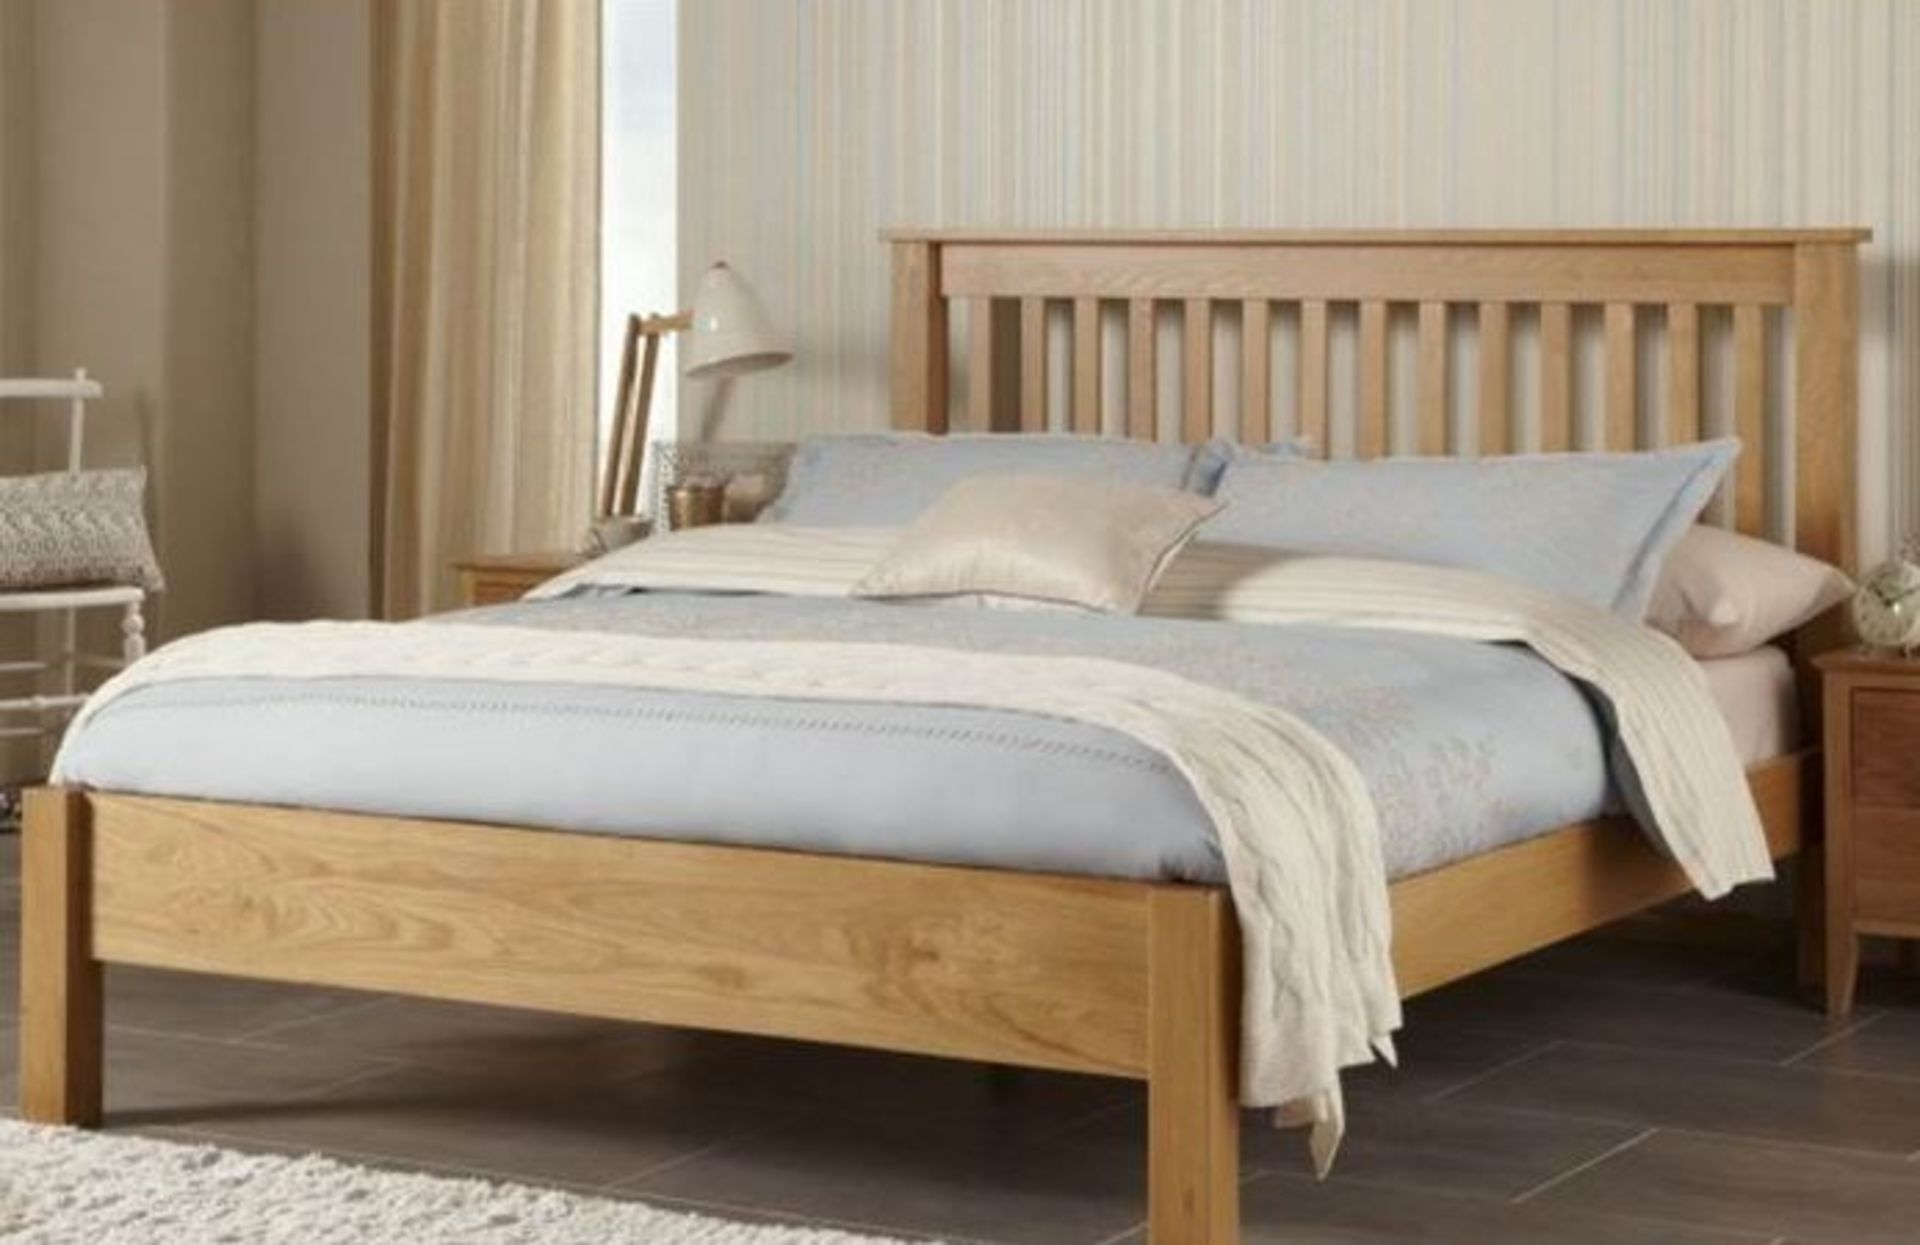 + VAT Brand New CS Designs "Windsor" Natural Oak Double Bed Frame - Brand New Stunning Quality -